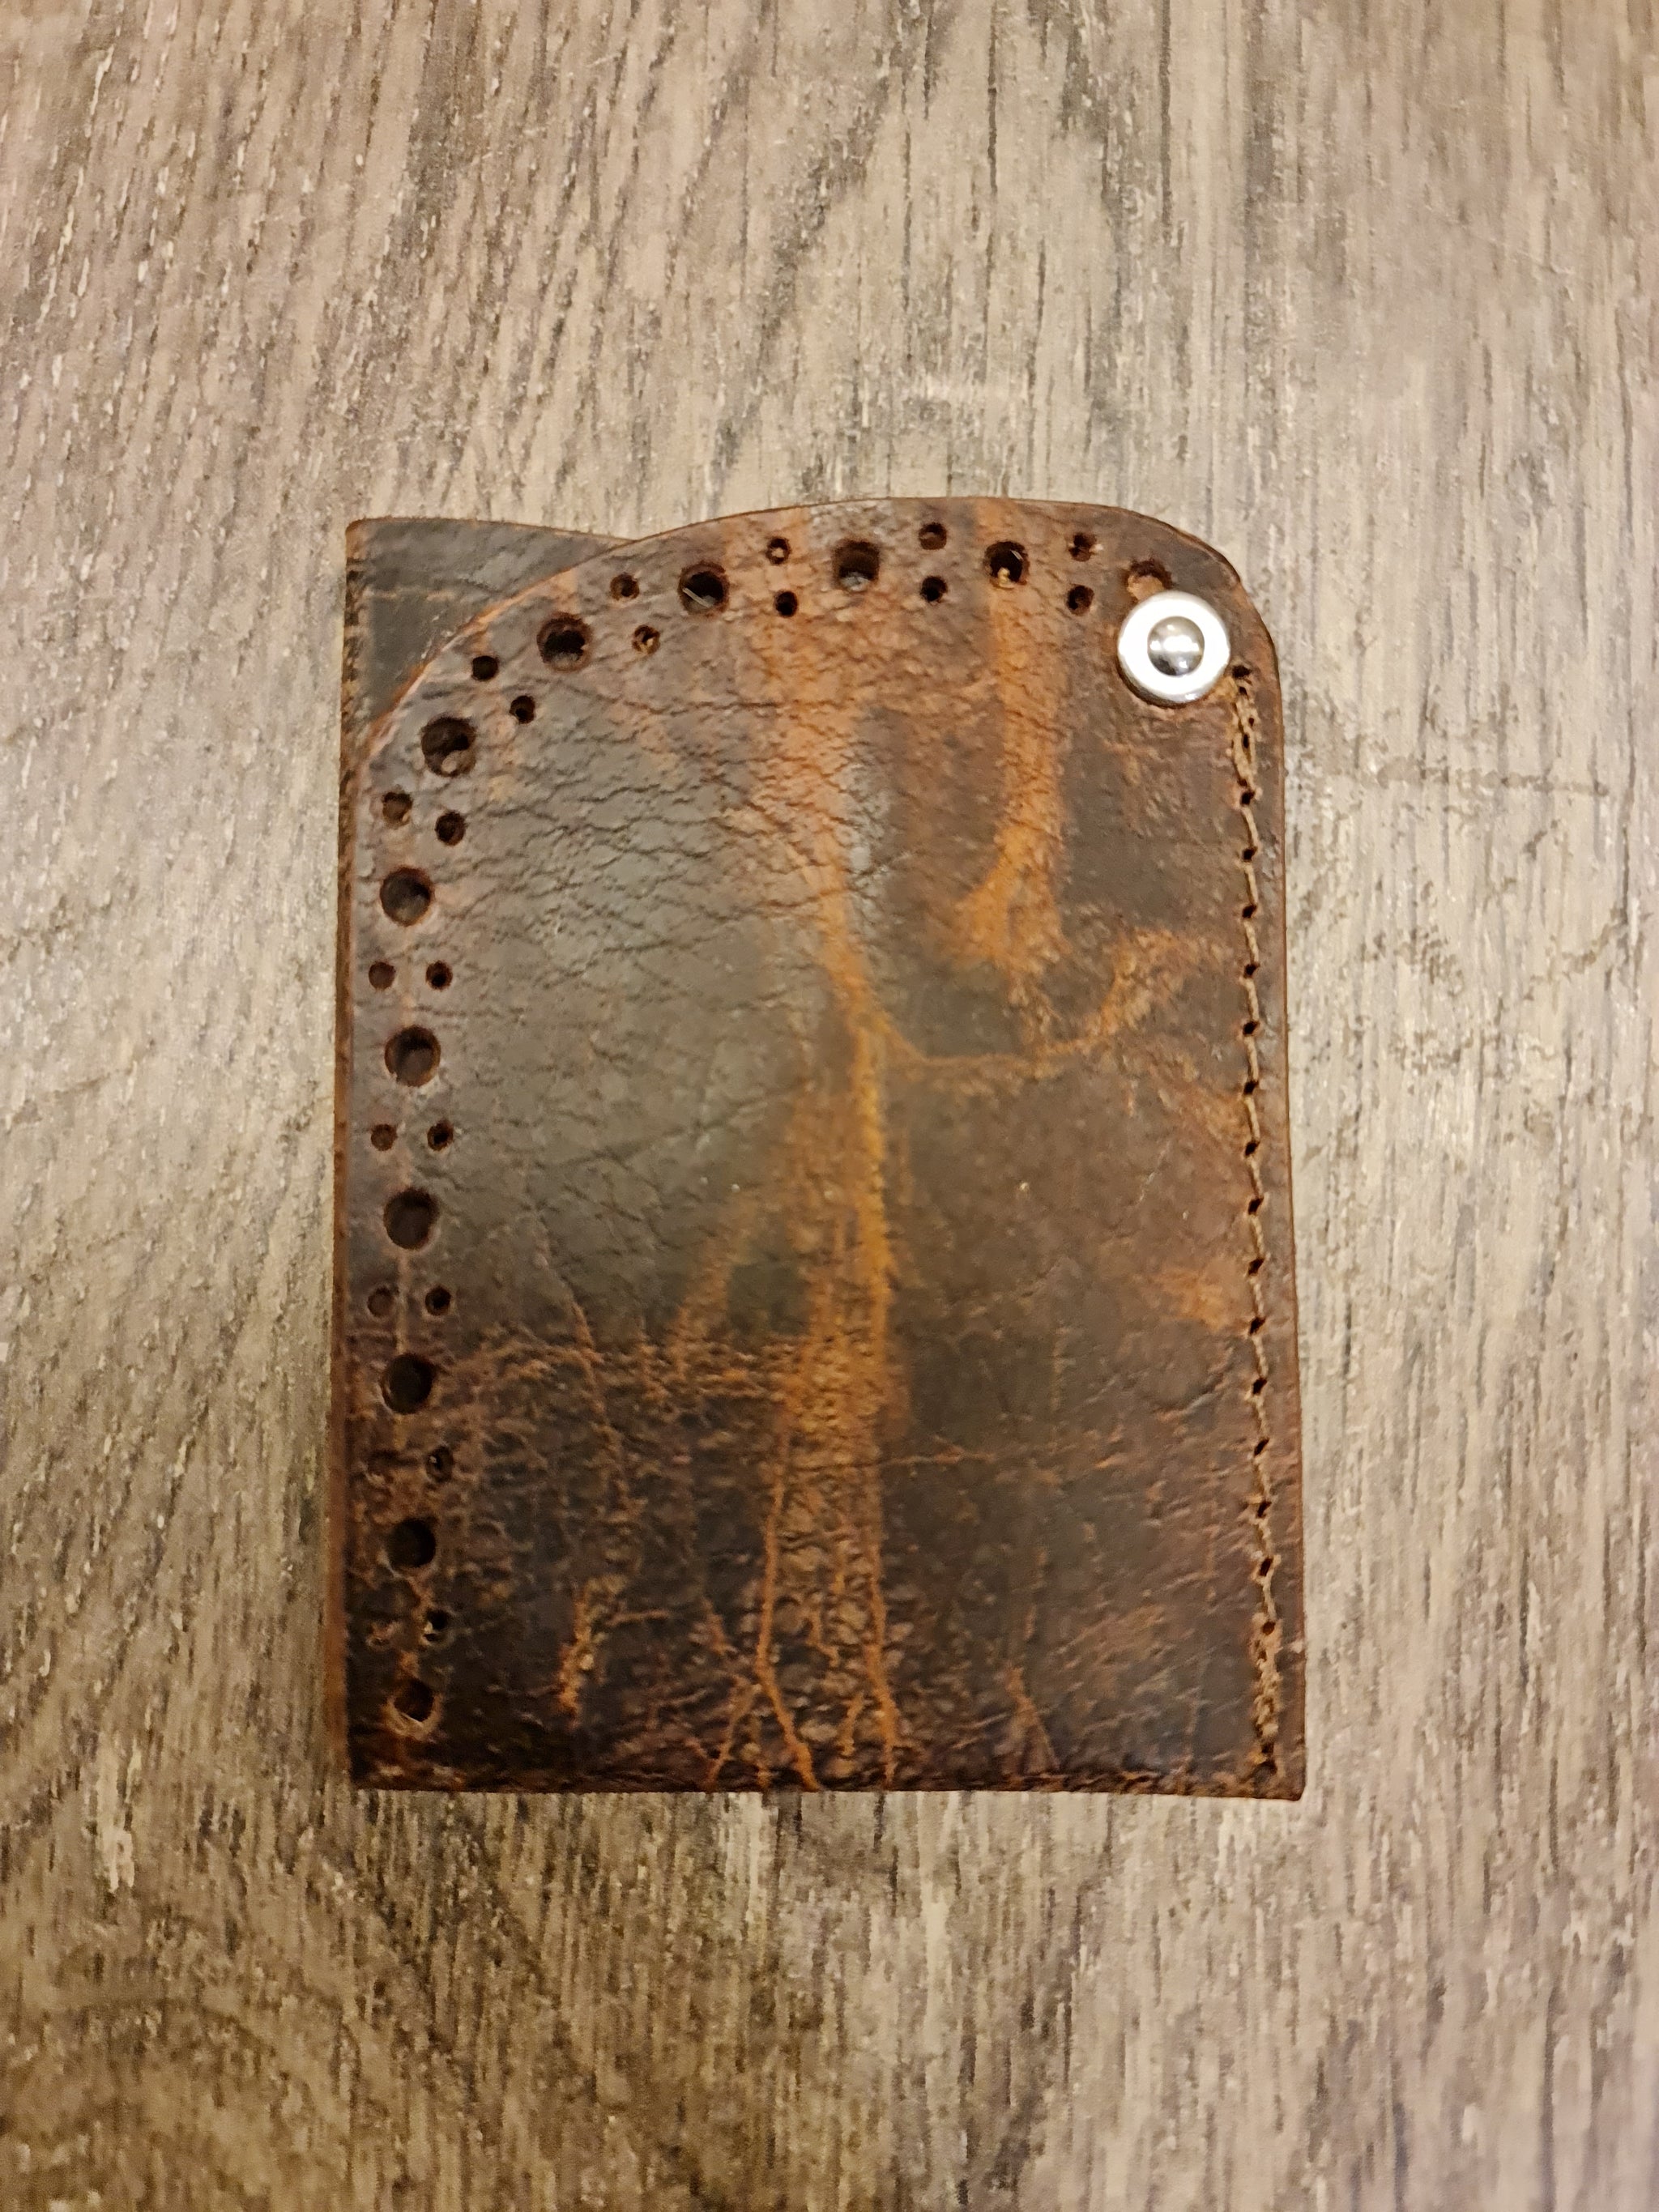 Retreat Clothing Handmade Leather Cardholders